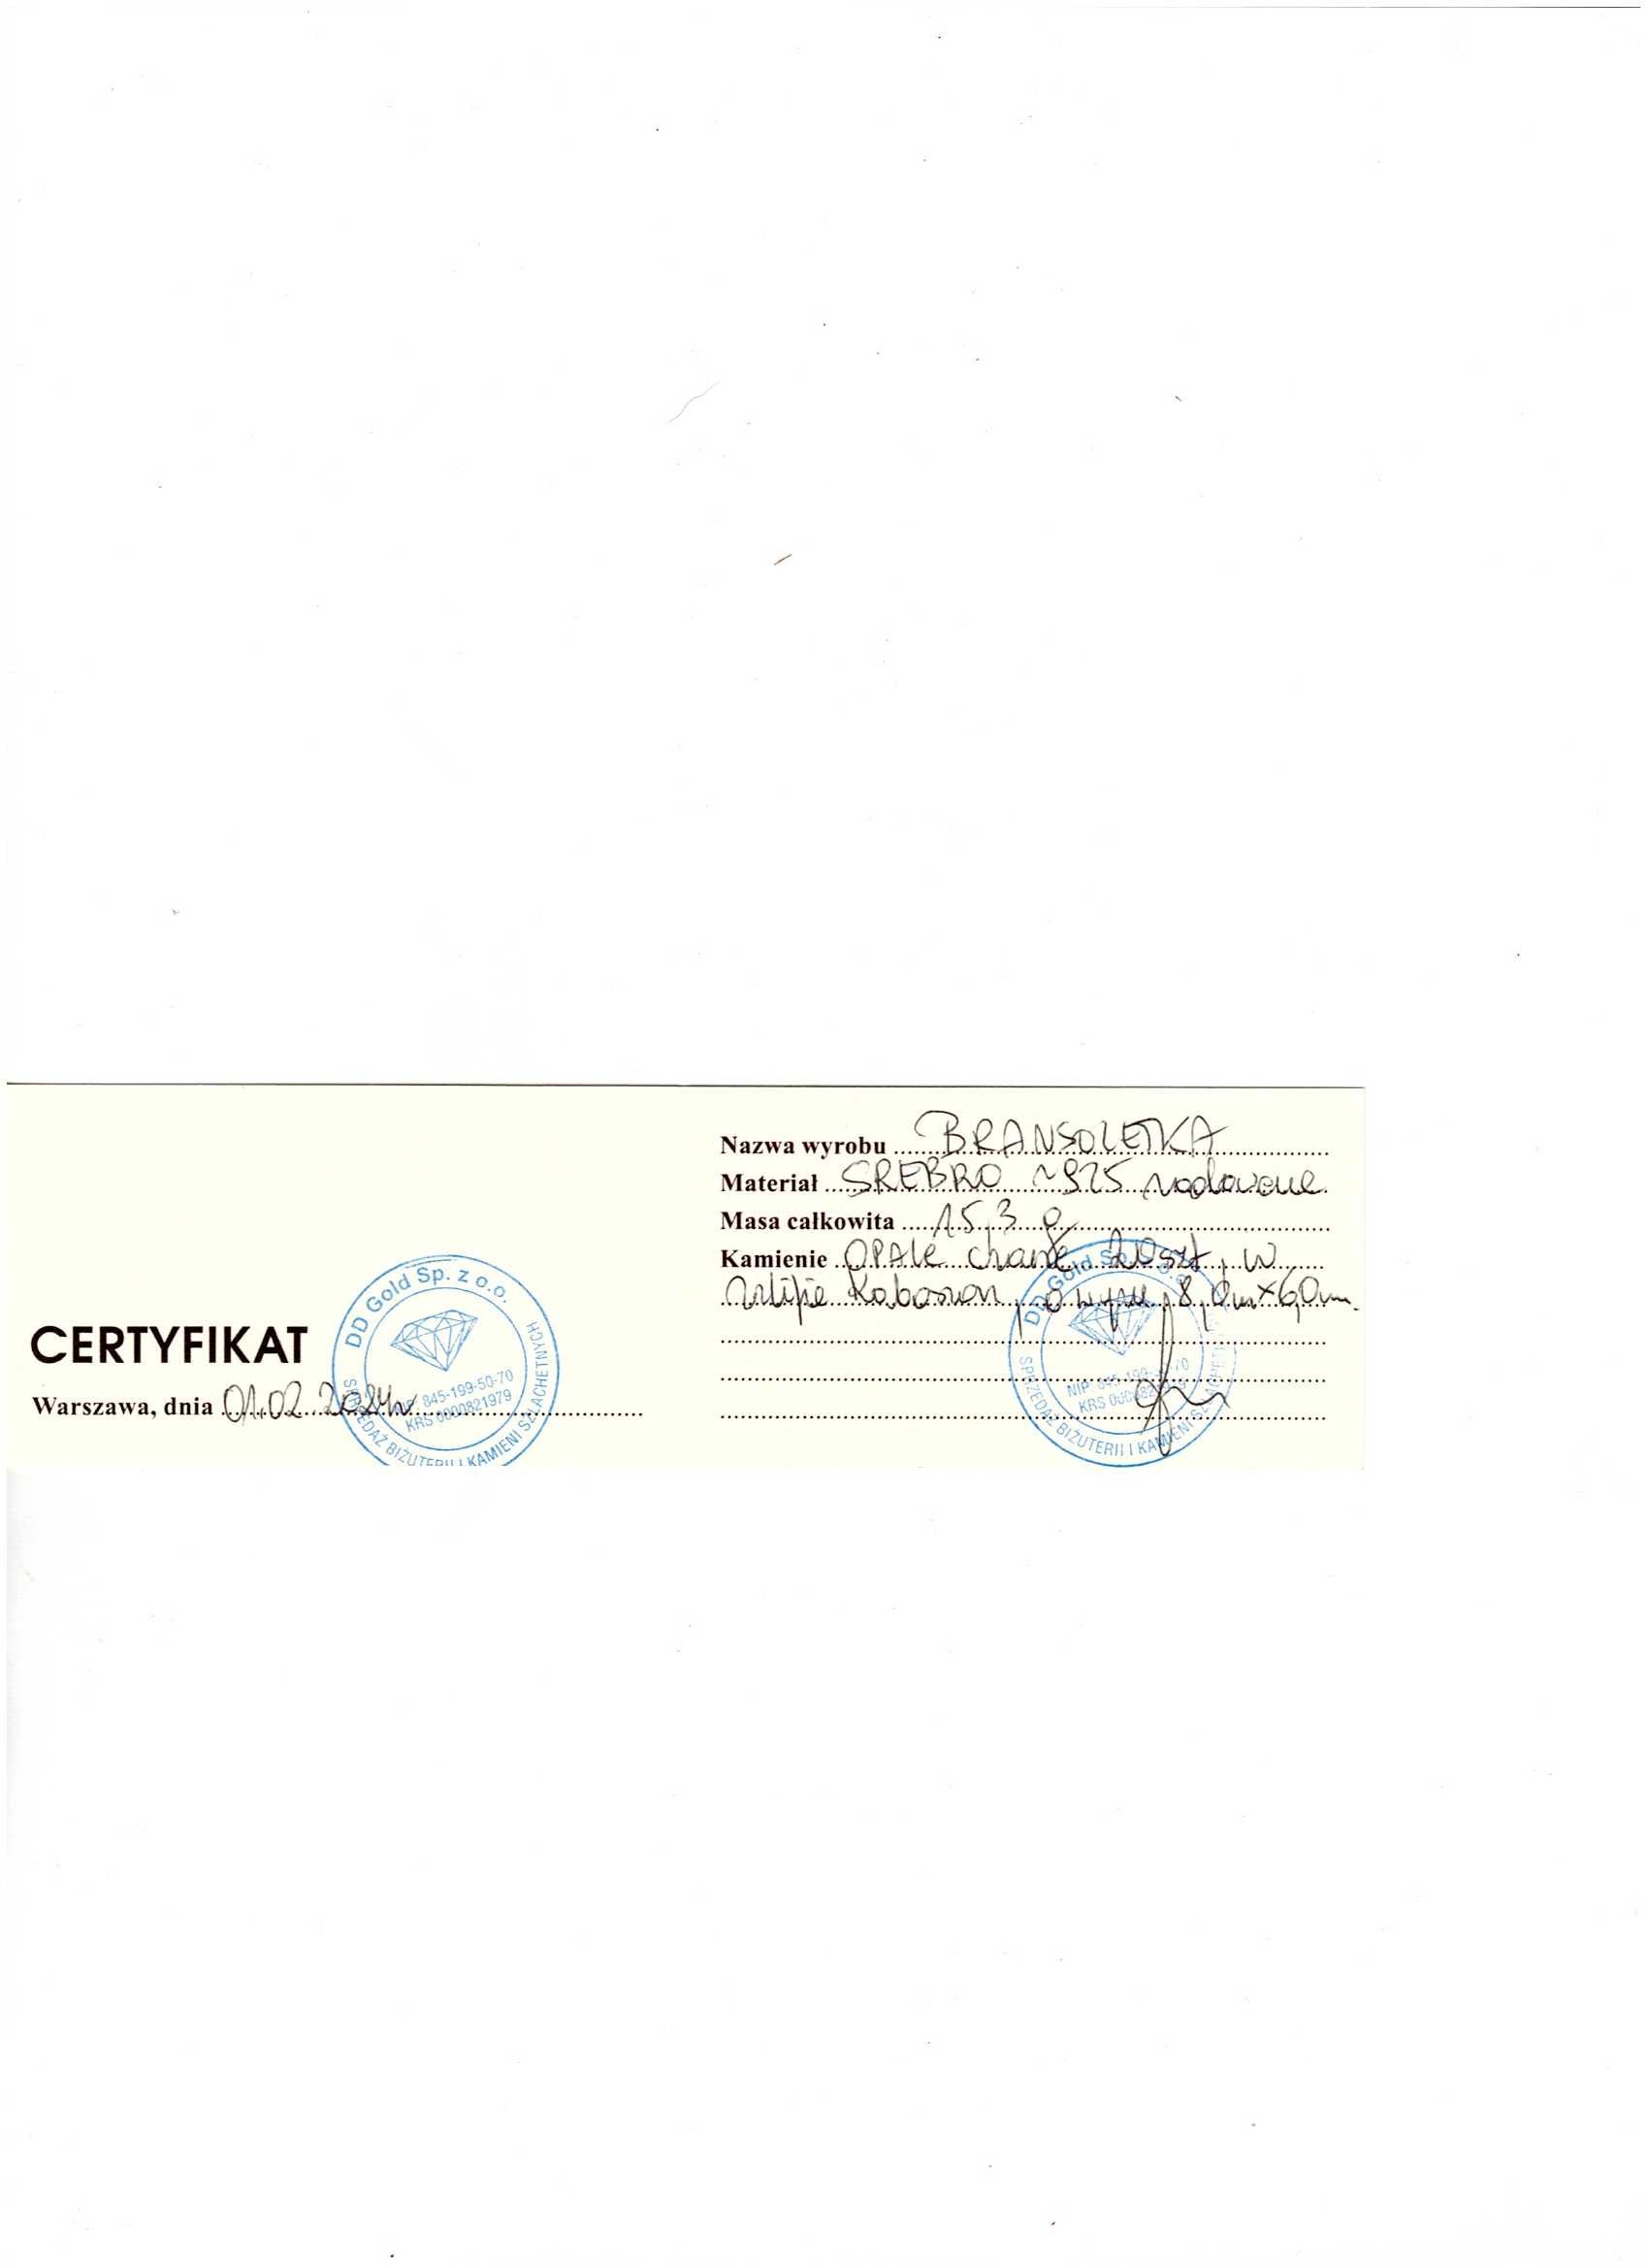 bransoletka srebro rodowane 925 czarne opale 15,34 g certyfikat